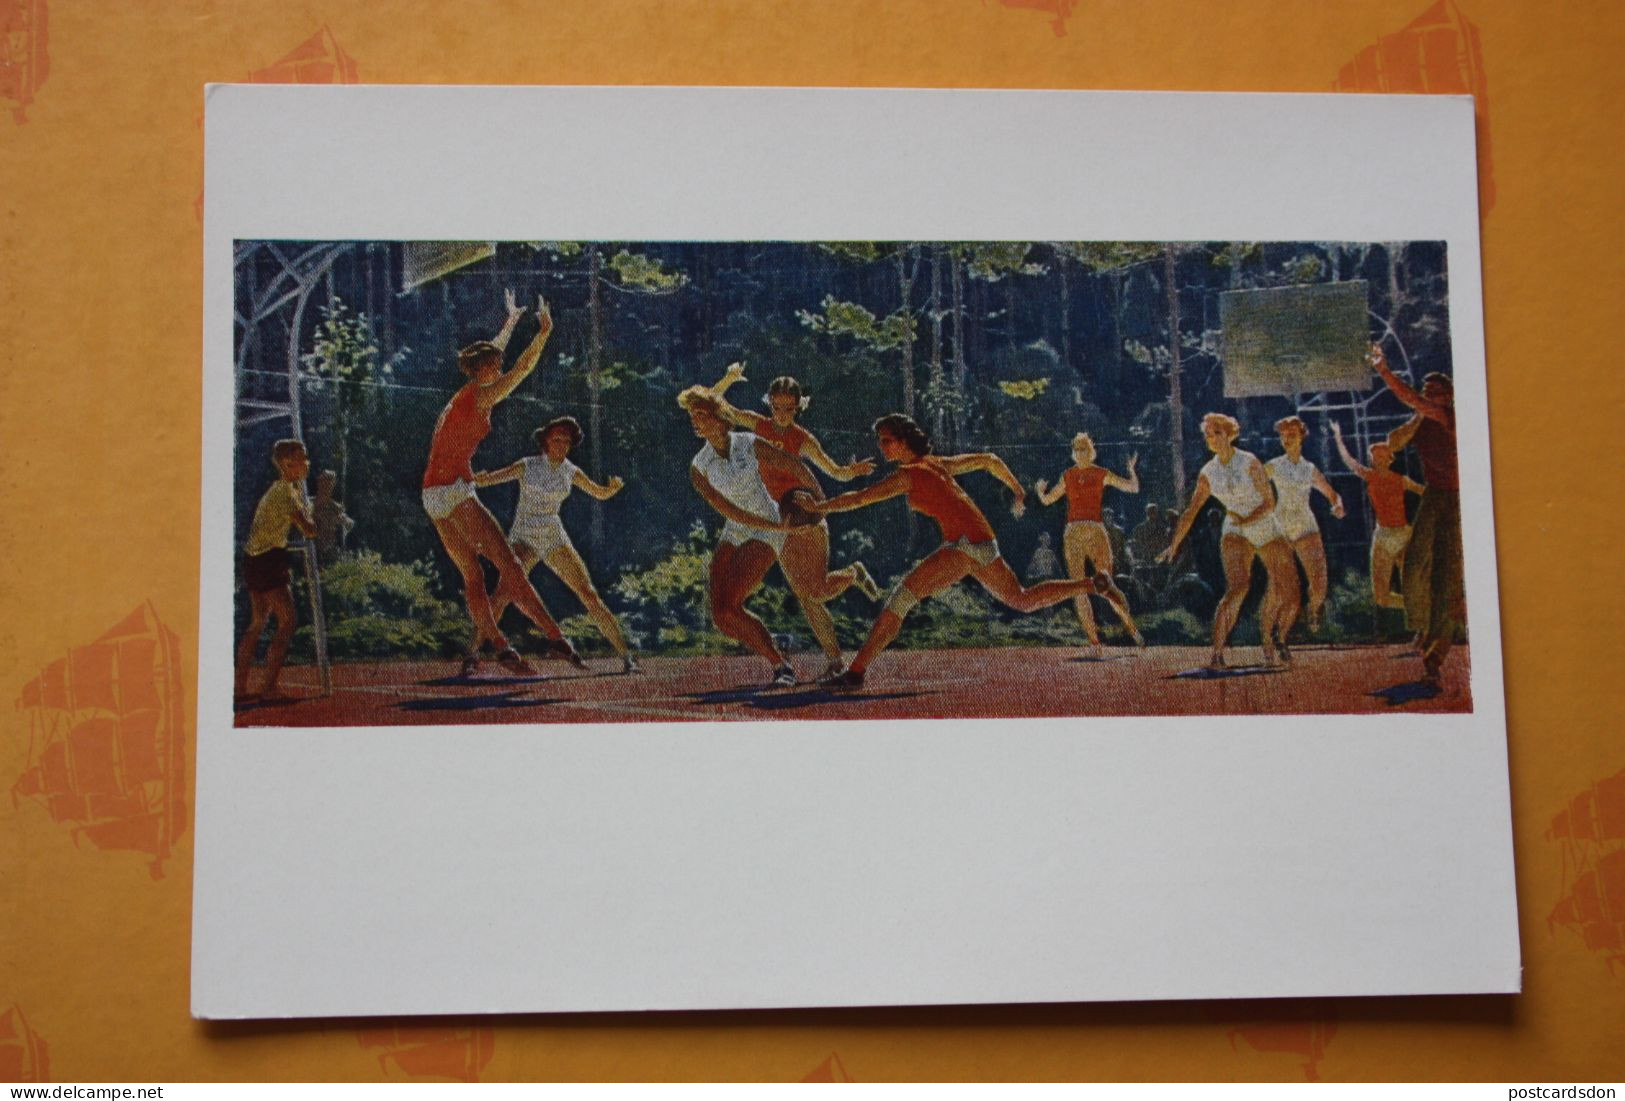 Old USSR Postcard - BASKETBALL By Talberg & Korolev - 1963 - Rare Edition! - Pallacanestro